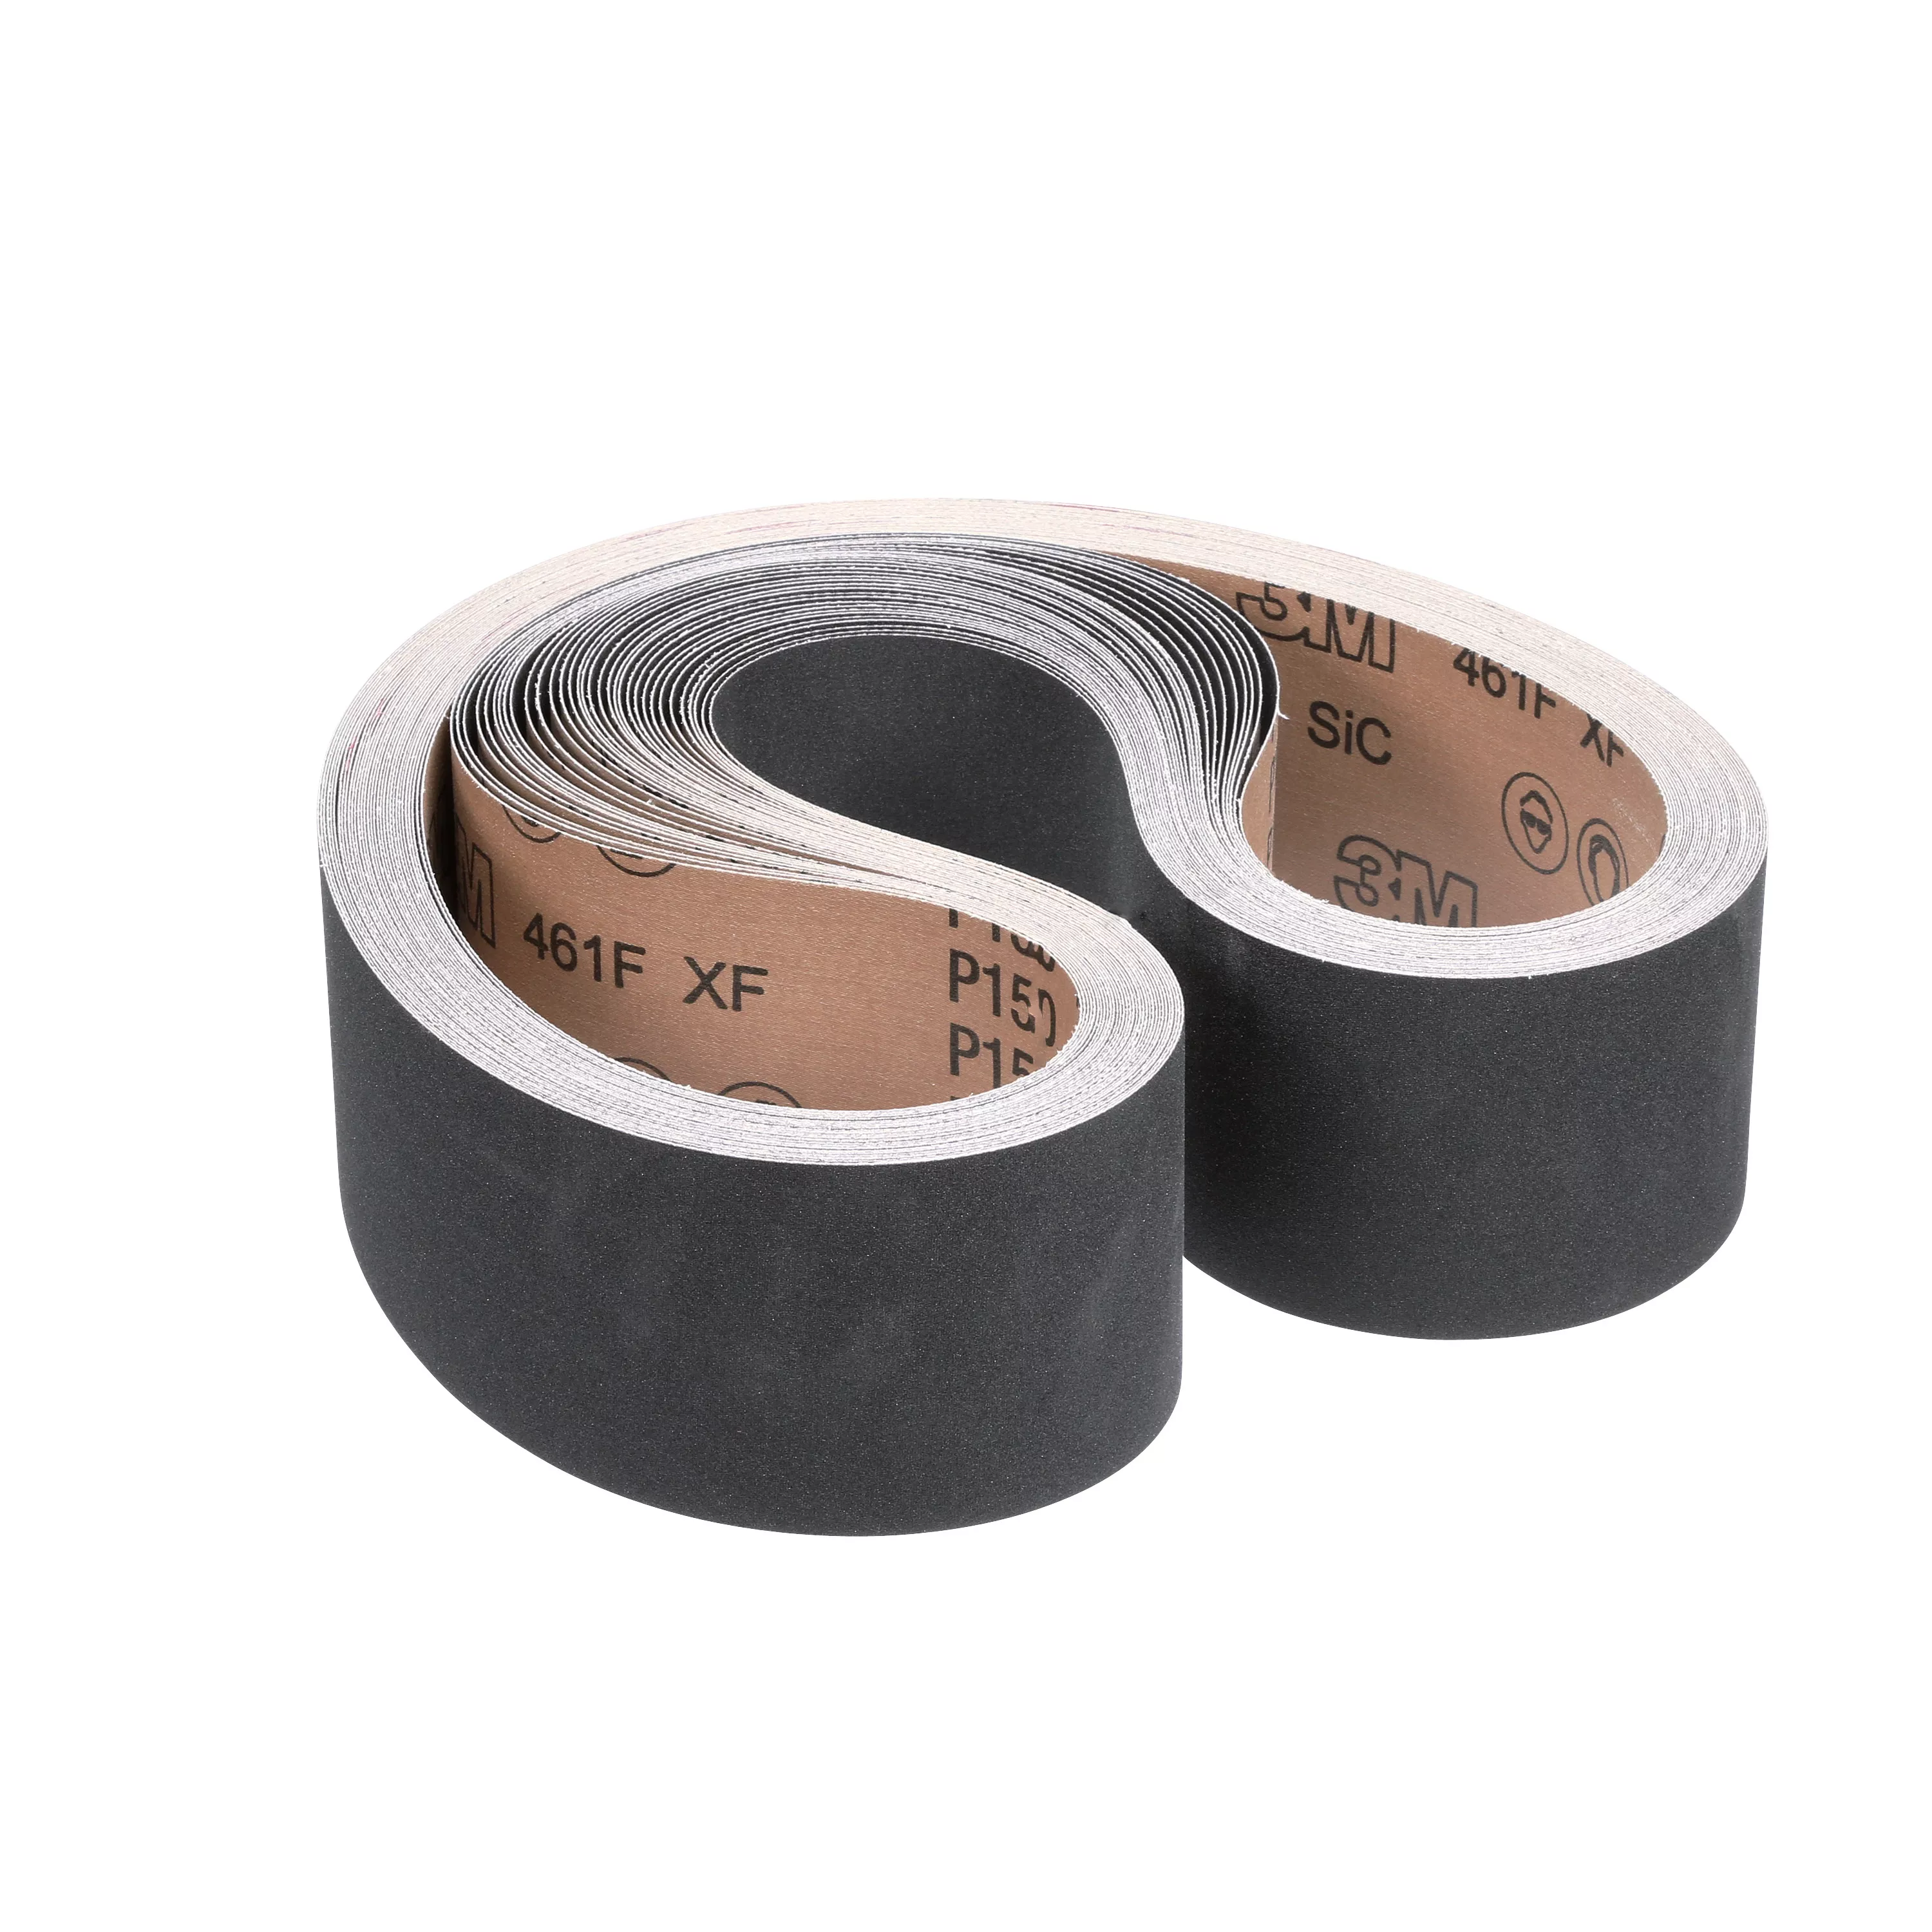 3M™ Cloth Belt 461F, P60 YF-weight, 57 in x 156-34 in, Film-lok,
Full-flex, 40 ea/Pallet, Bulk